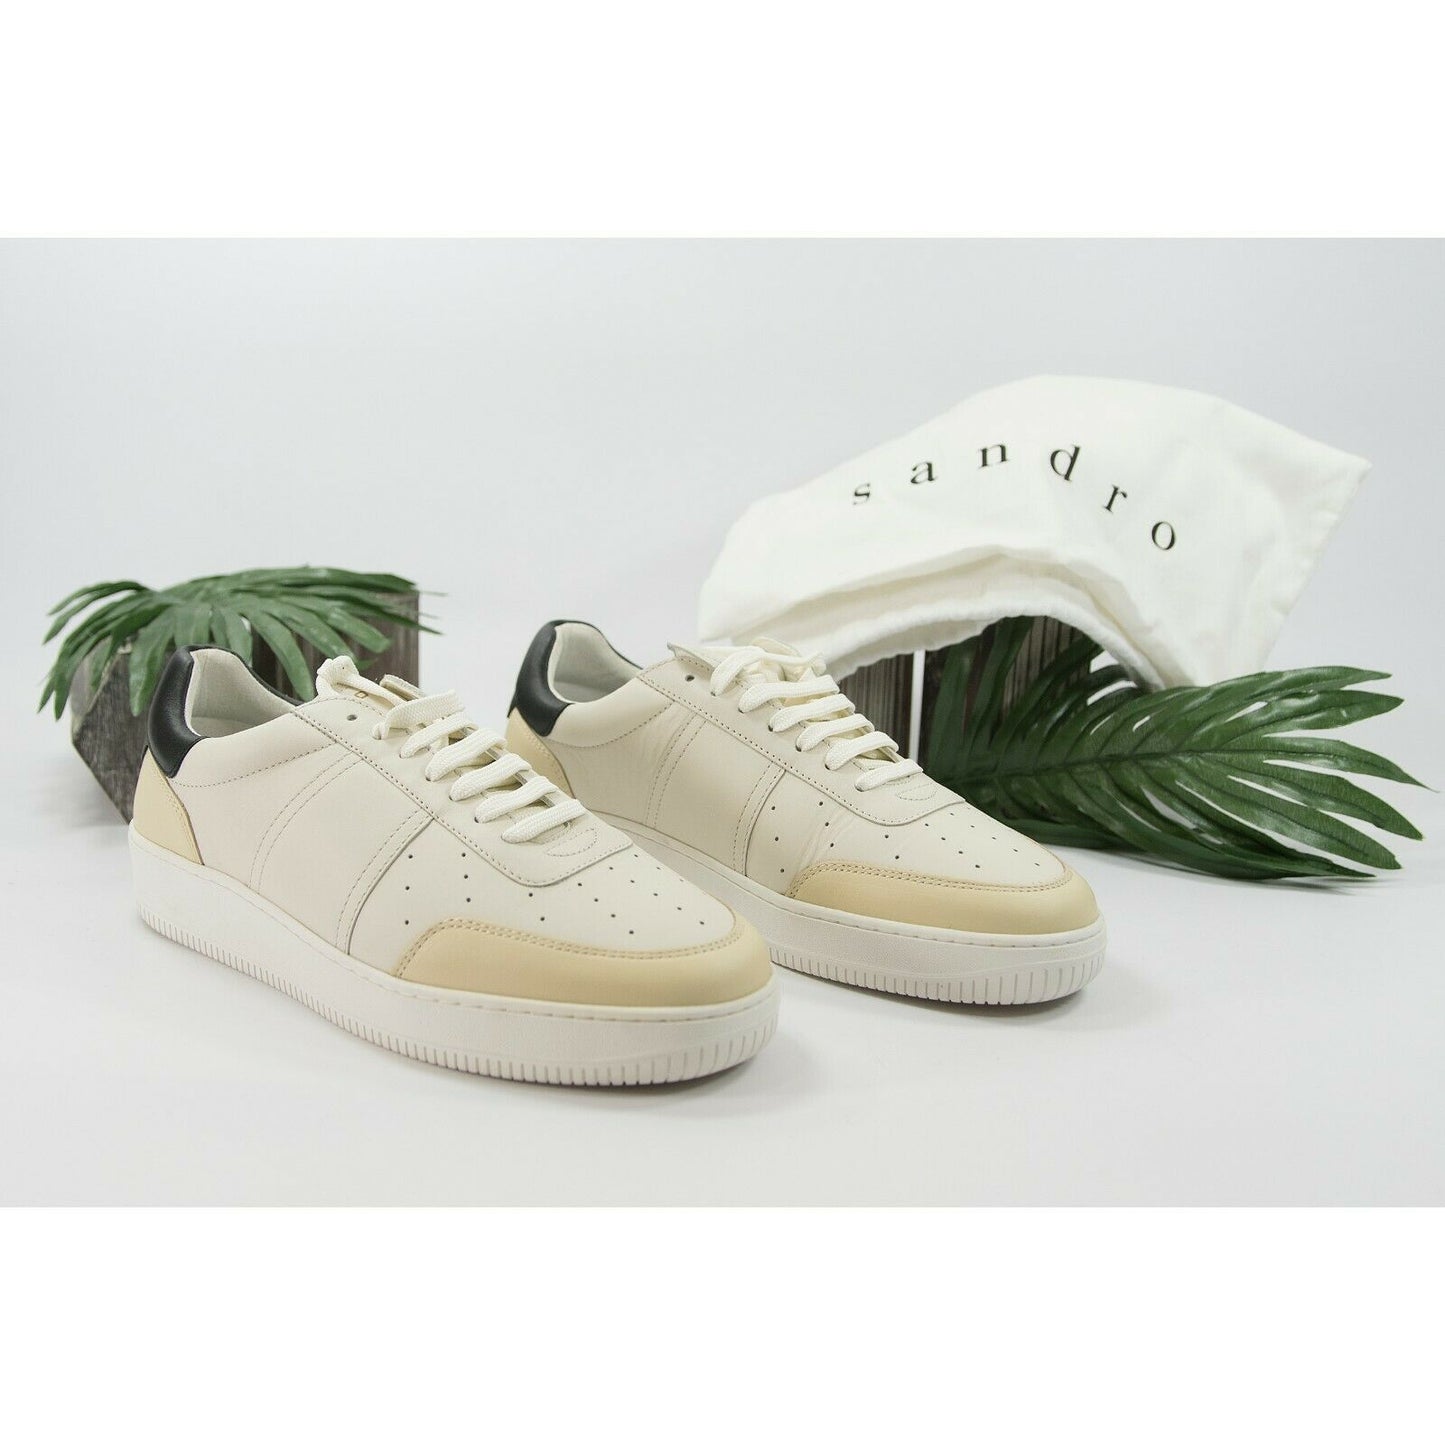 Sandro Unisex H17 Miran Cream Black Leather Sneaker Shoes Size 37 US 7